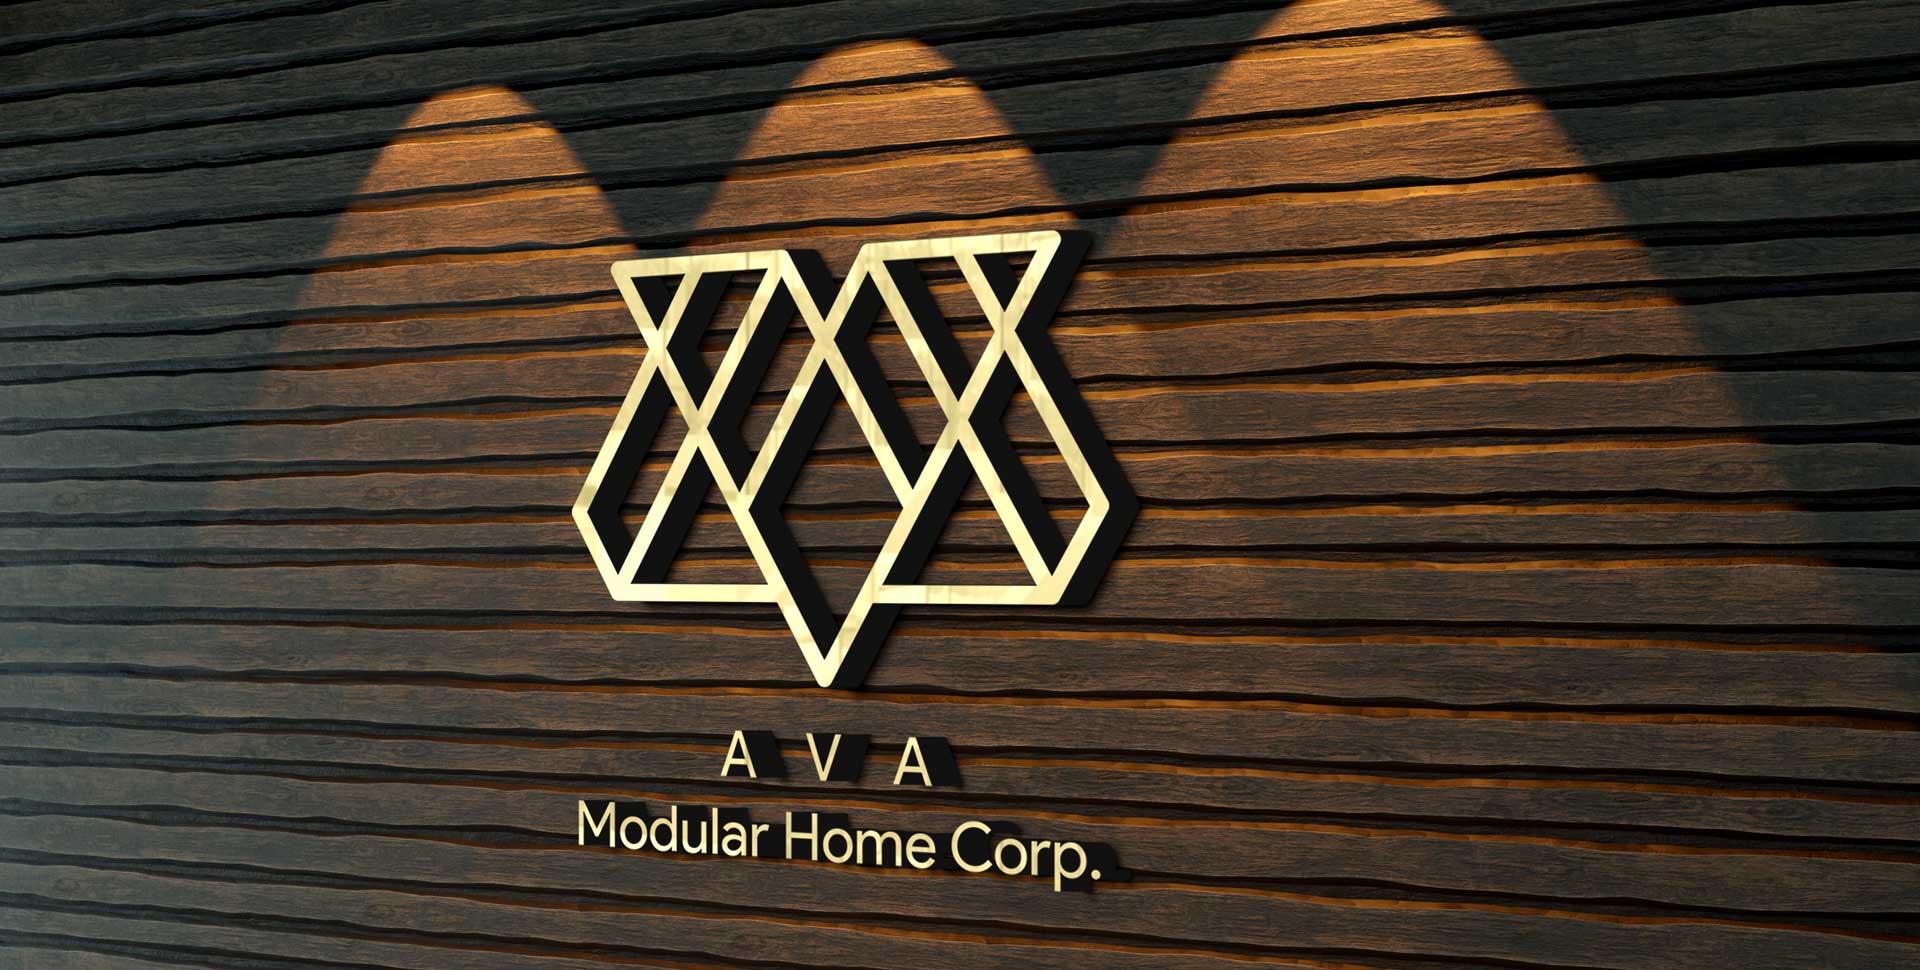 Ava Modular Home Corp. logo on the wall